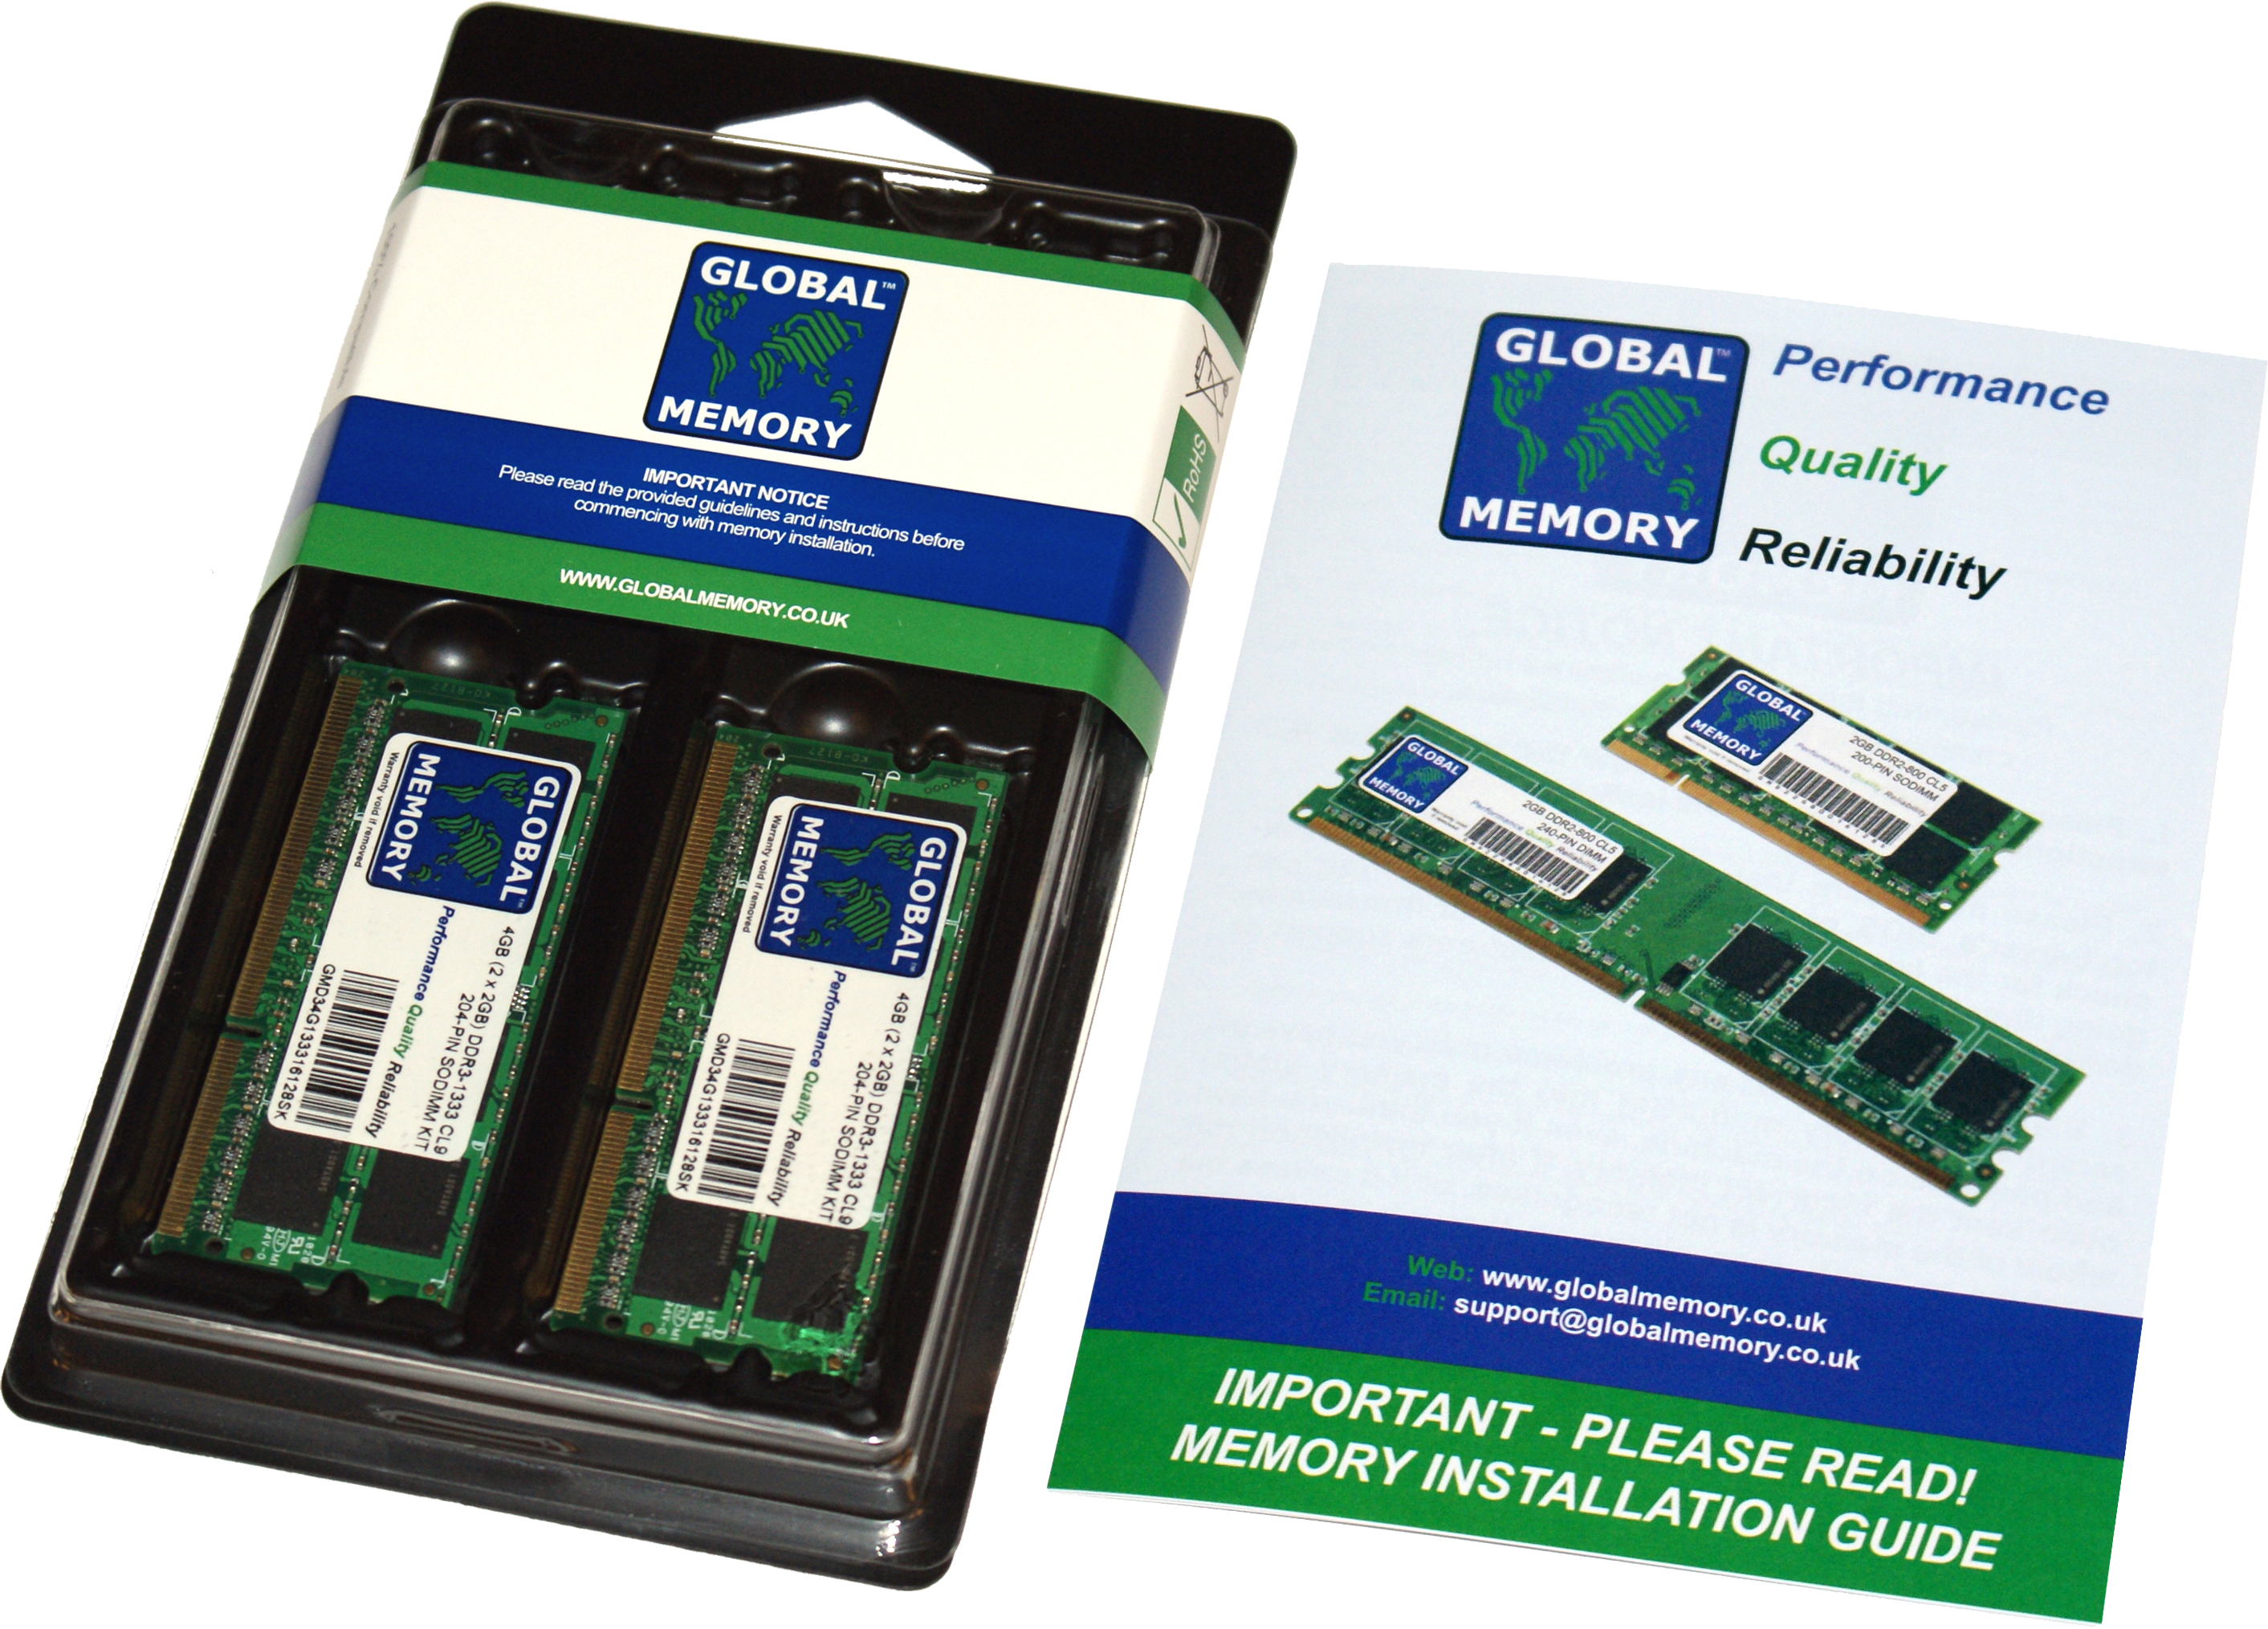 32GB (2 x 16GB) DDR3 1866MHz PC3-14900 204-PIN SODIMM MEMORY RAM KIT FOR TOSHIBA LAPTOPS/NOTEBOOKS